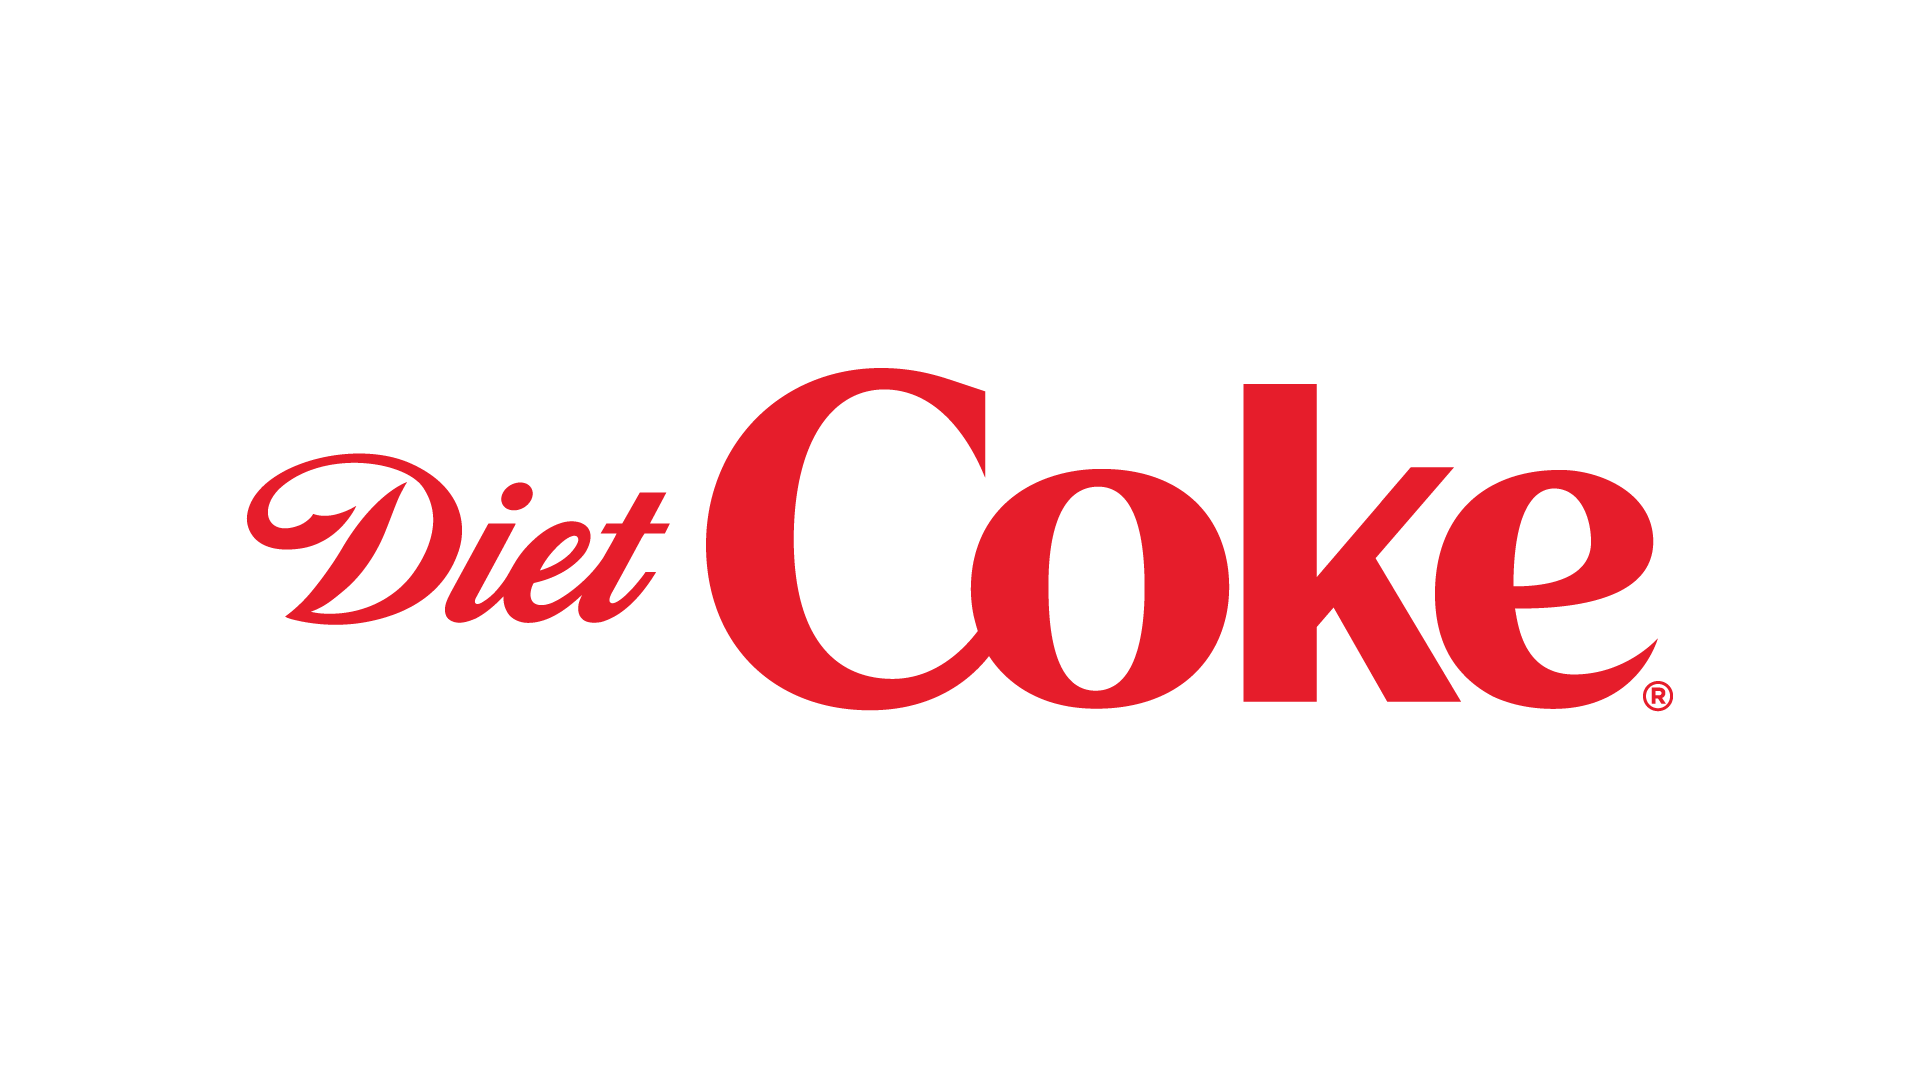 Diet Coke Logo - Diet coke logo png 4 PNG Image